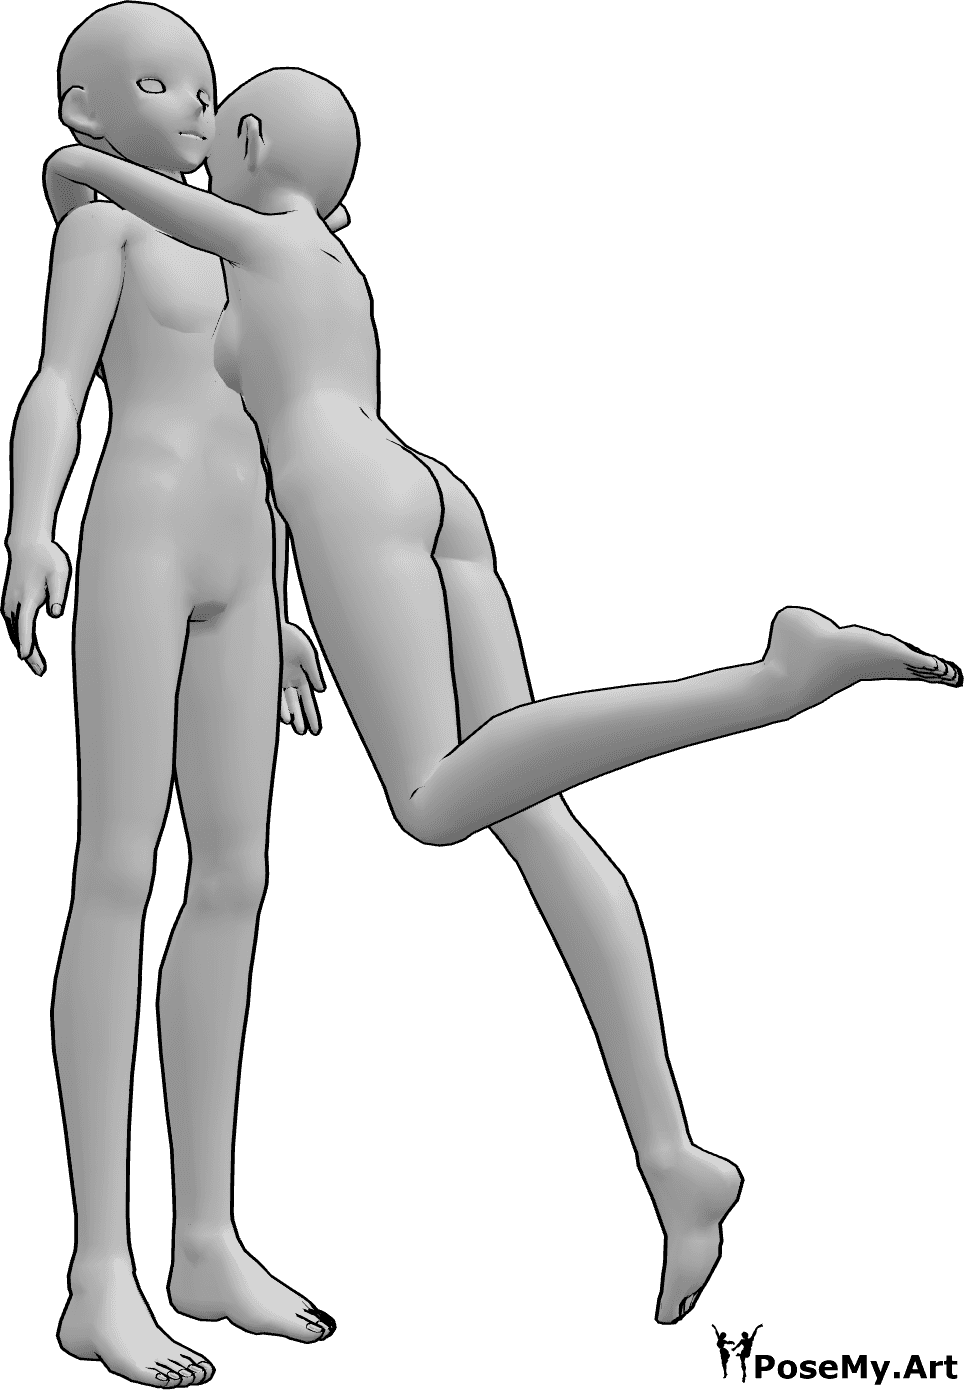 Referencia de poses- Postura de abrazo sorpresa anime - Anime femenina está saltando y abrazando al macho, anime abrazo sorpresa pose